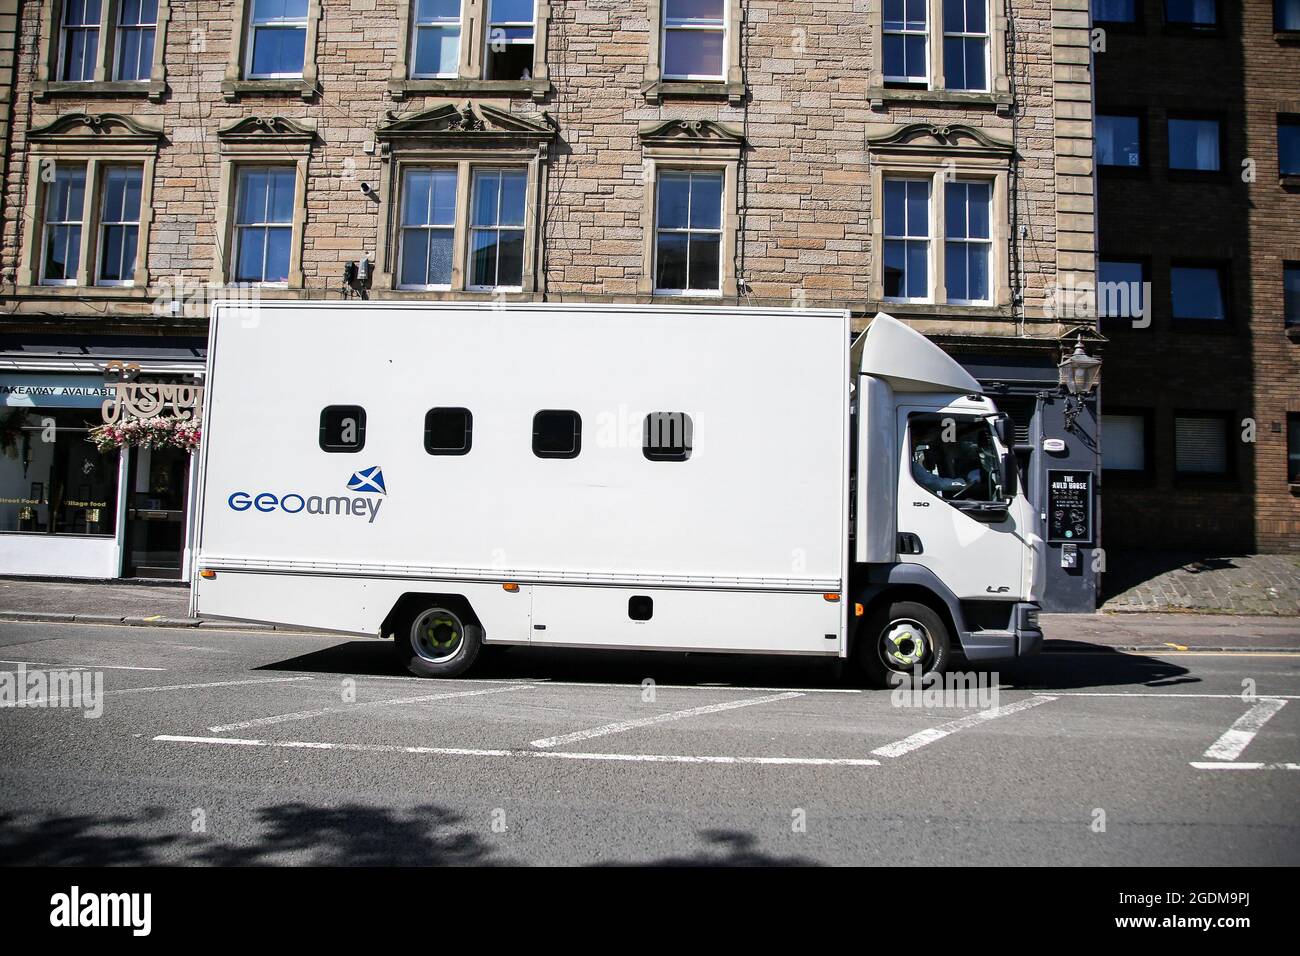 A Geoamey prison van seen in Edinburgh. Stock Photo